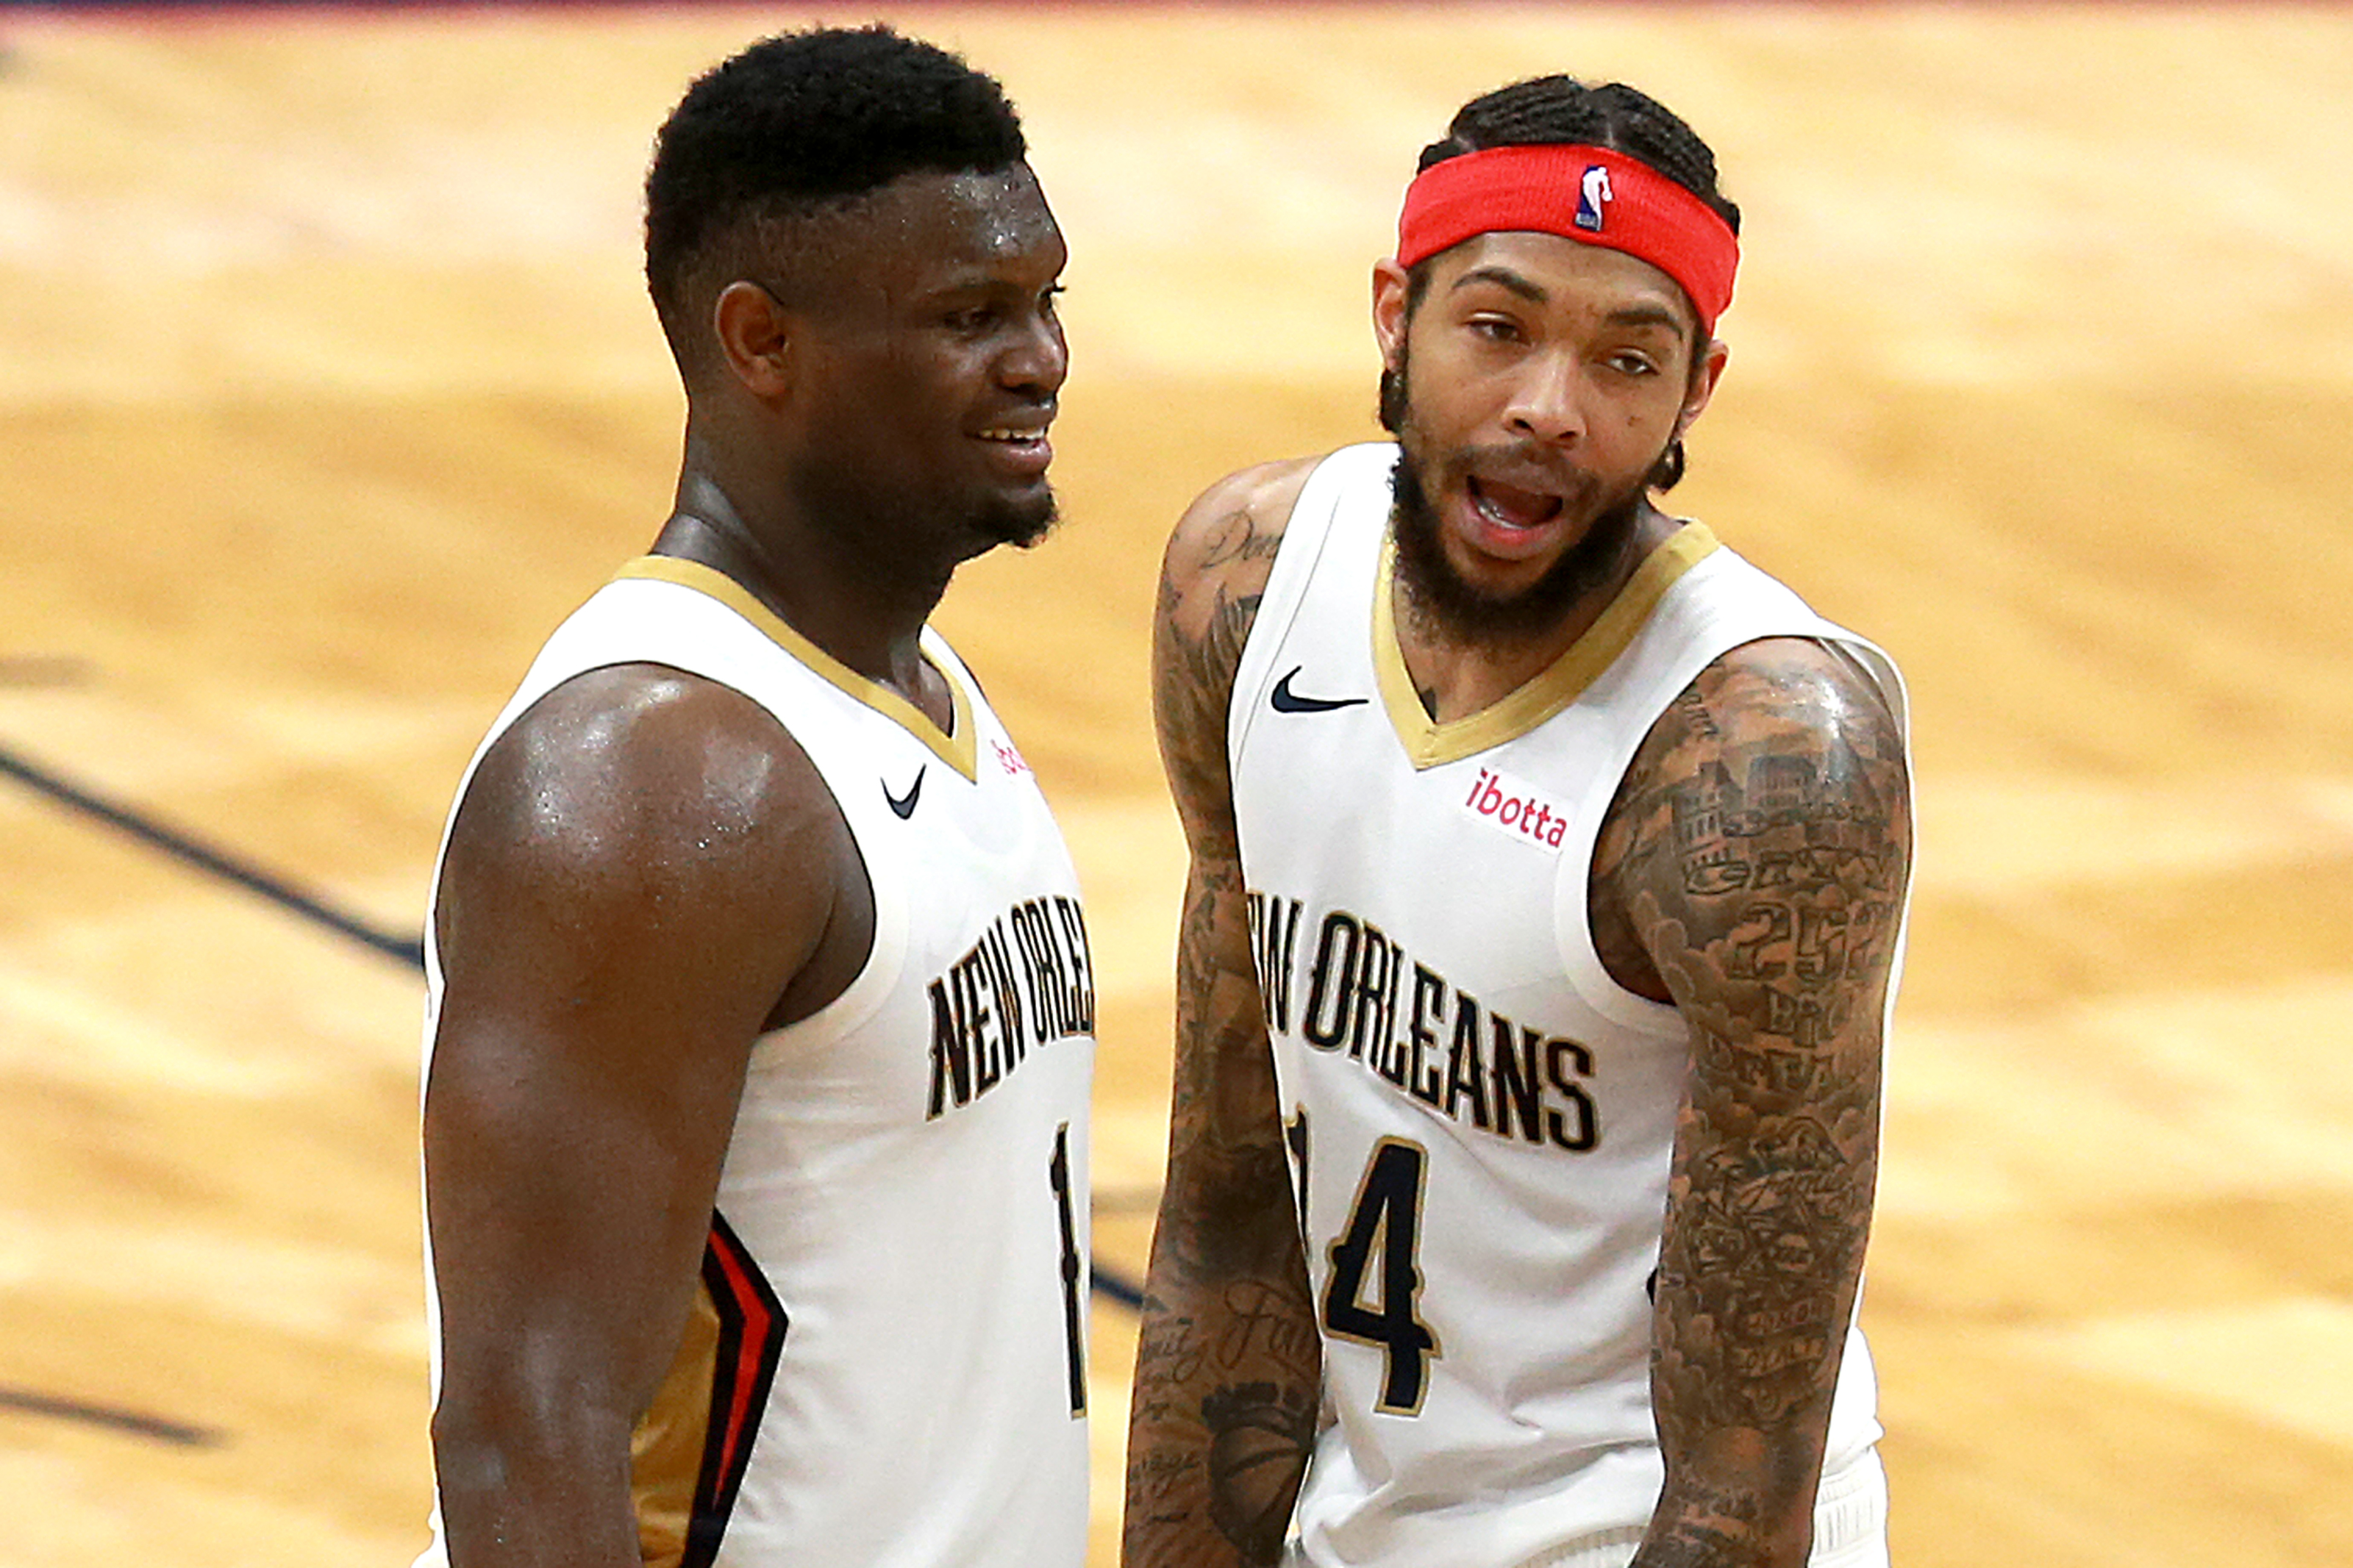 New Orleans NBA team Hornets renamed as Pelicans